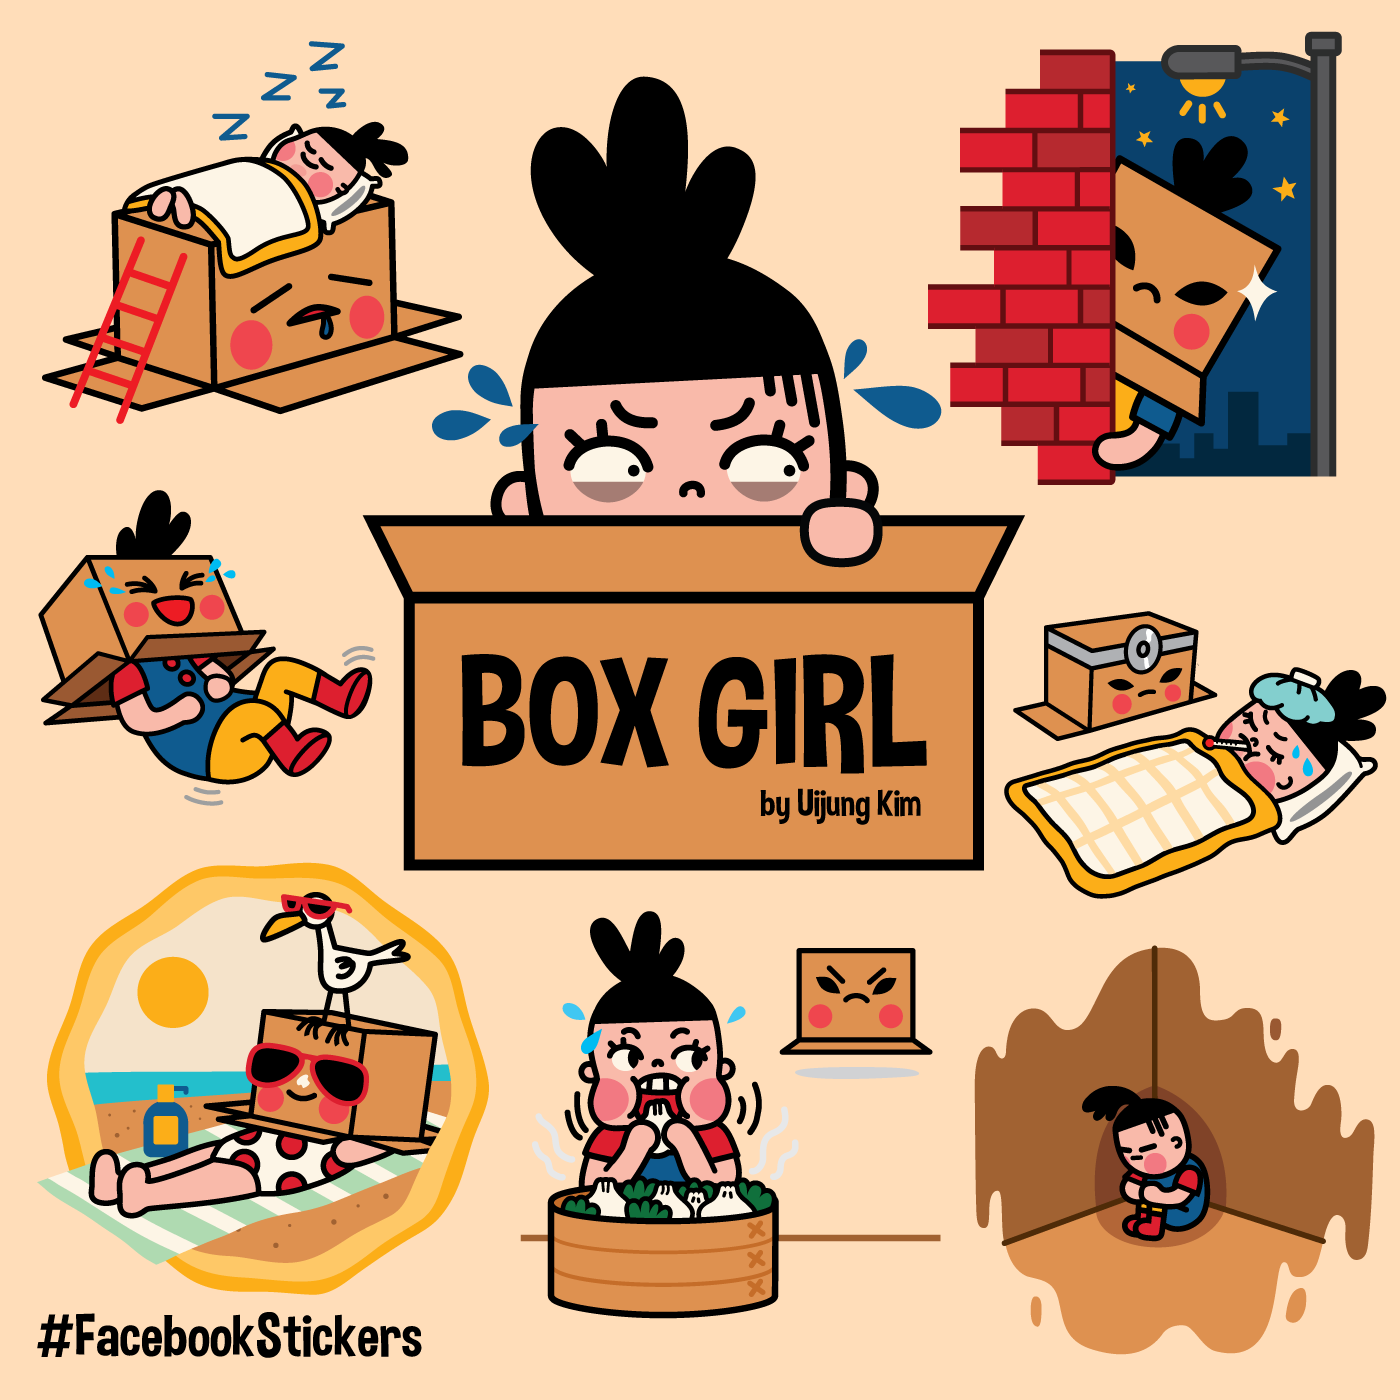 Facebookstickers facebook stickers art Character design  Character cute Vecrtor Illustrator